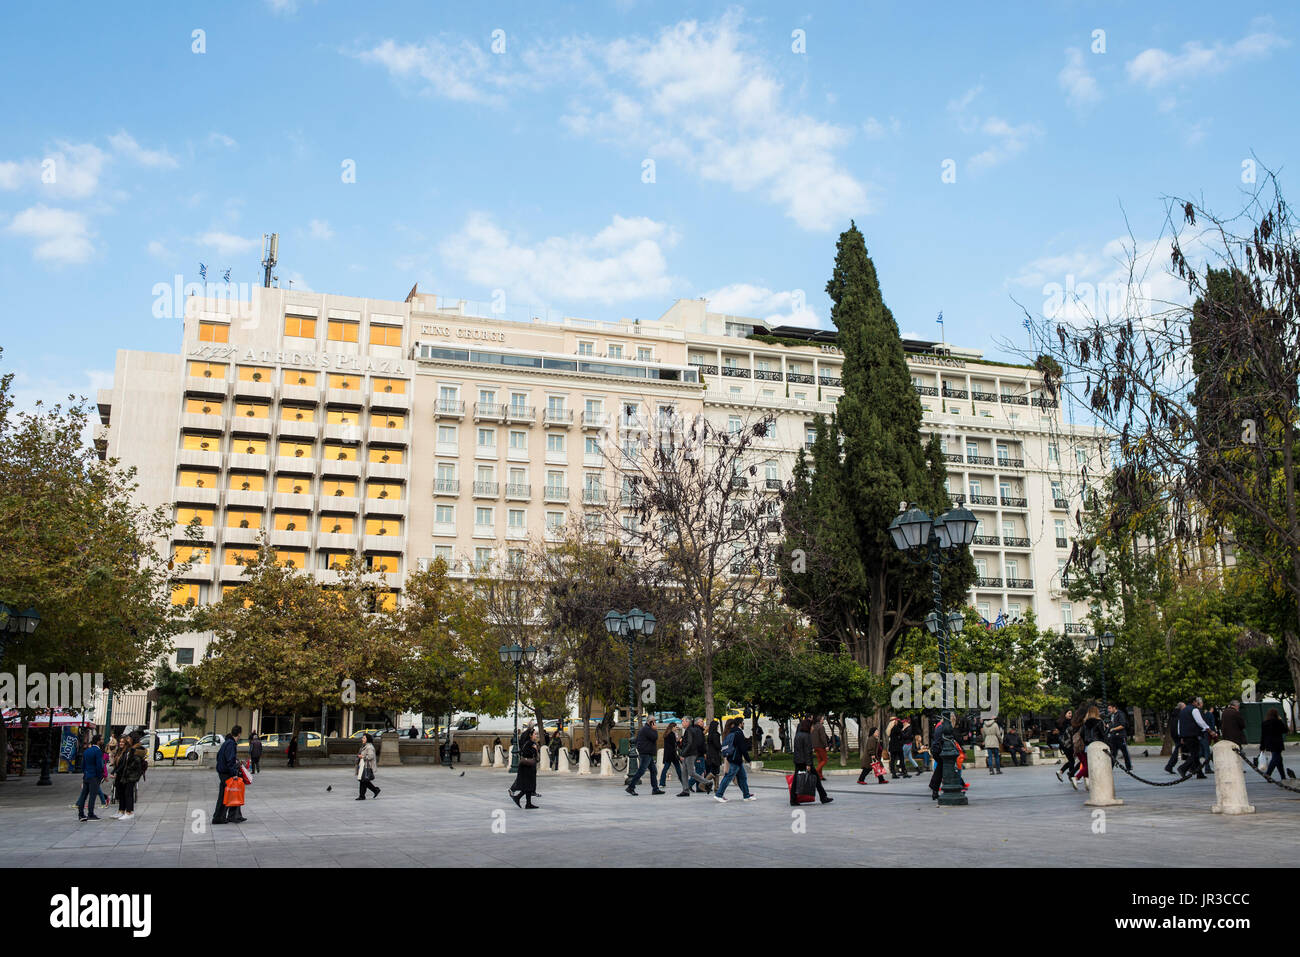 Grands hôtels, la Place Syntagma, Athènes Banque D'Images